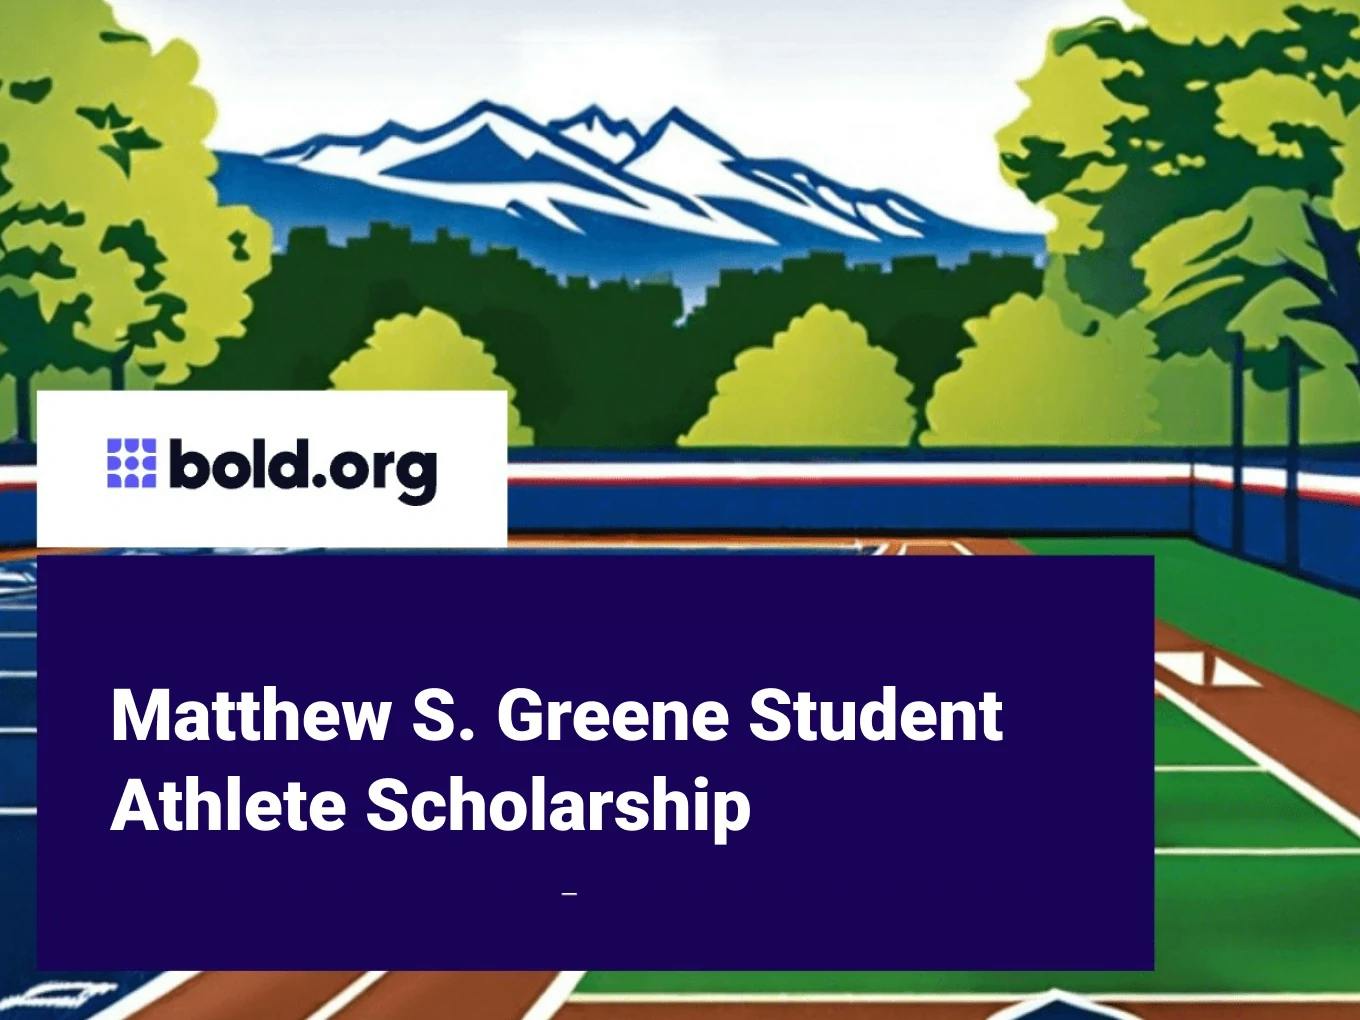 Matthew S. Greene Student Athlete Scholarship